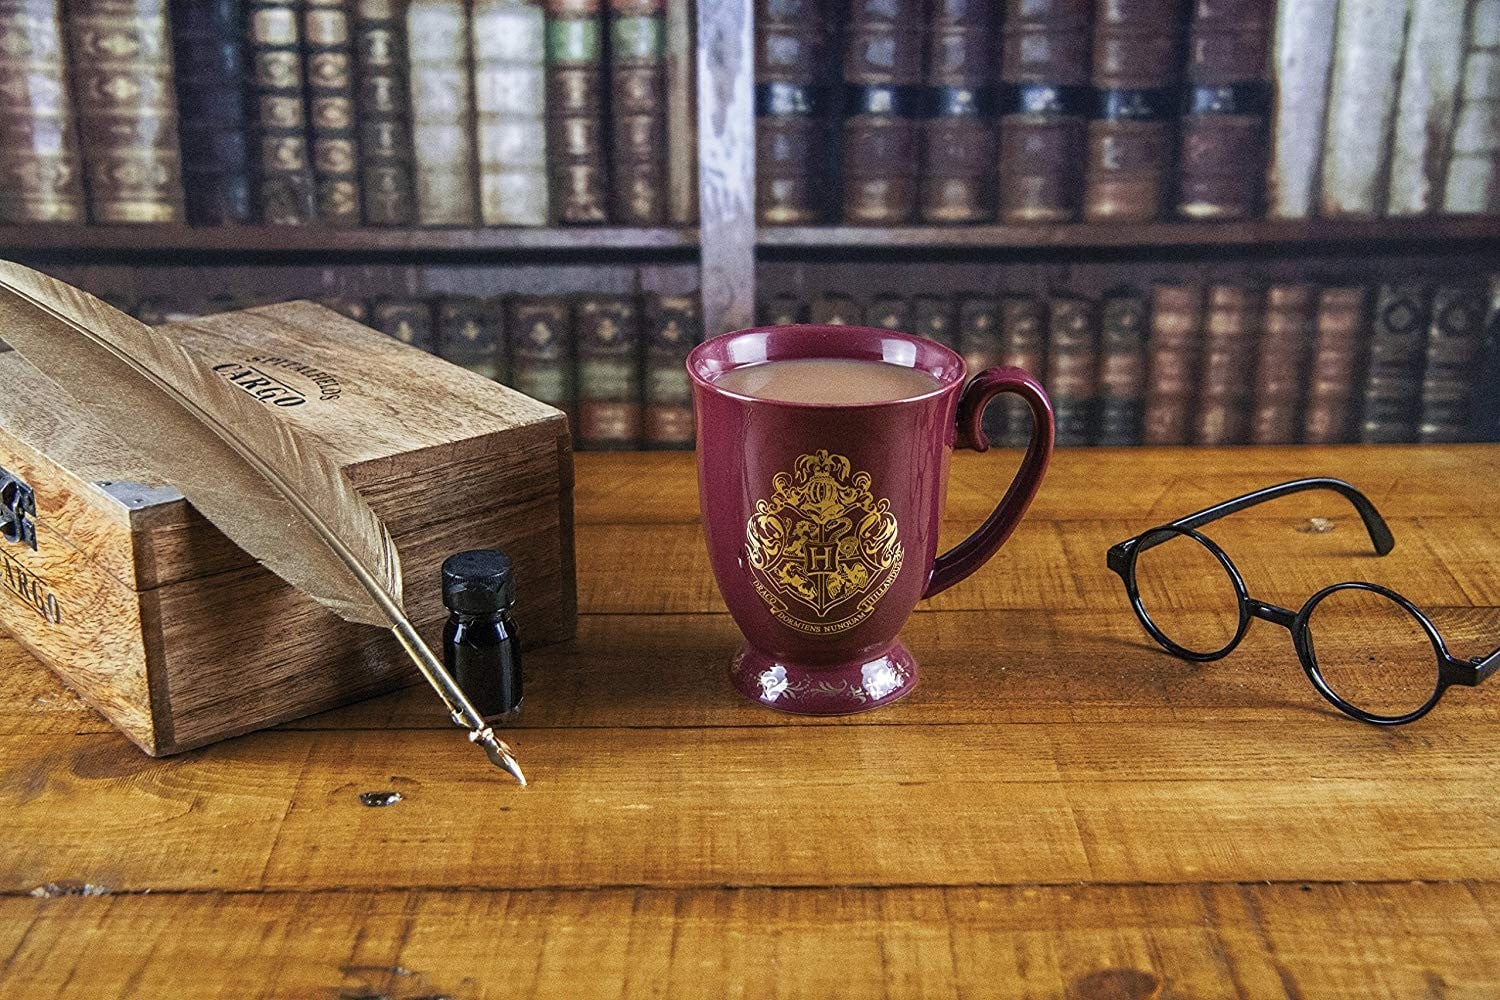 Hogwarts™ Crest Mug